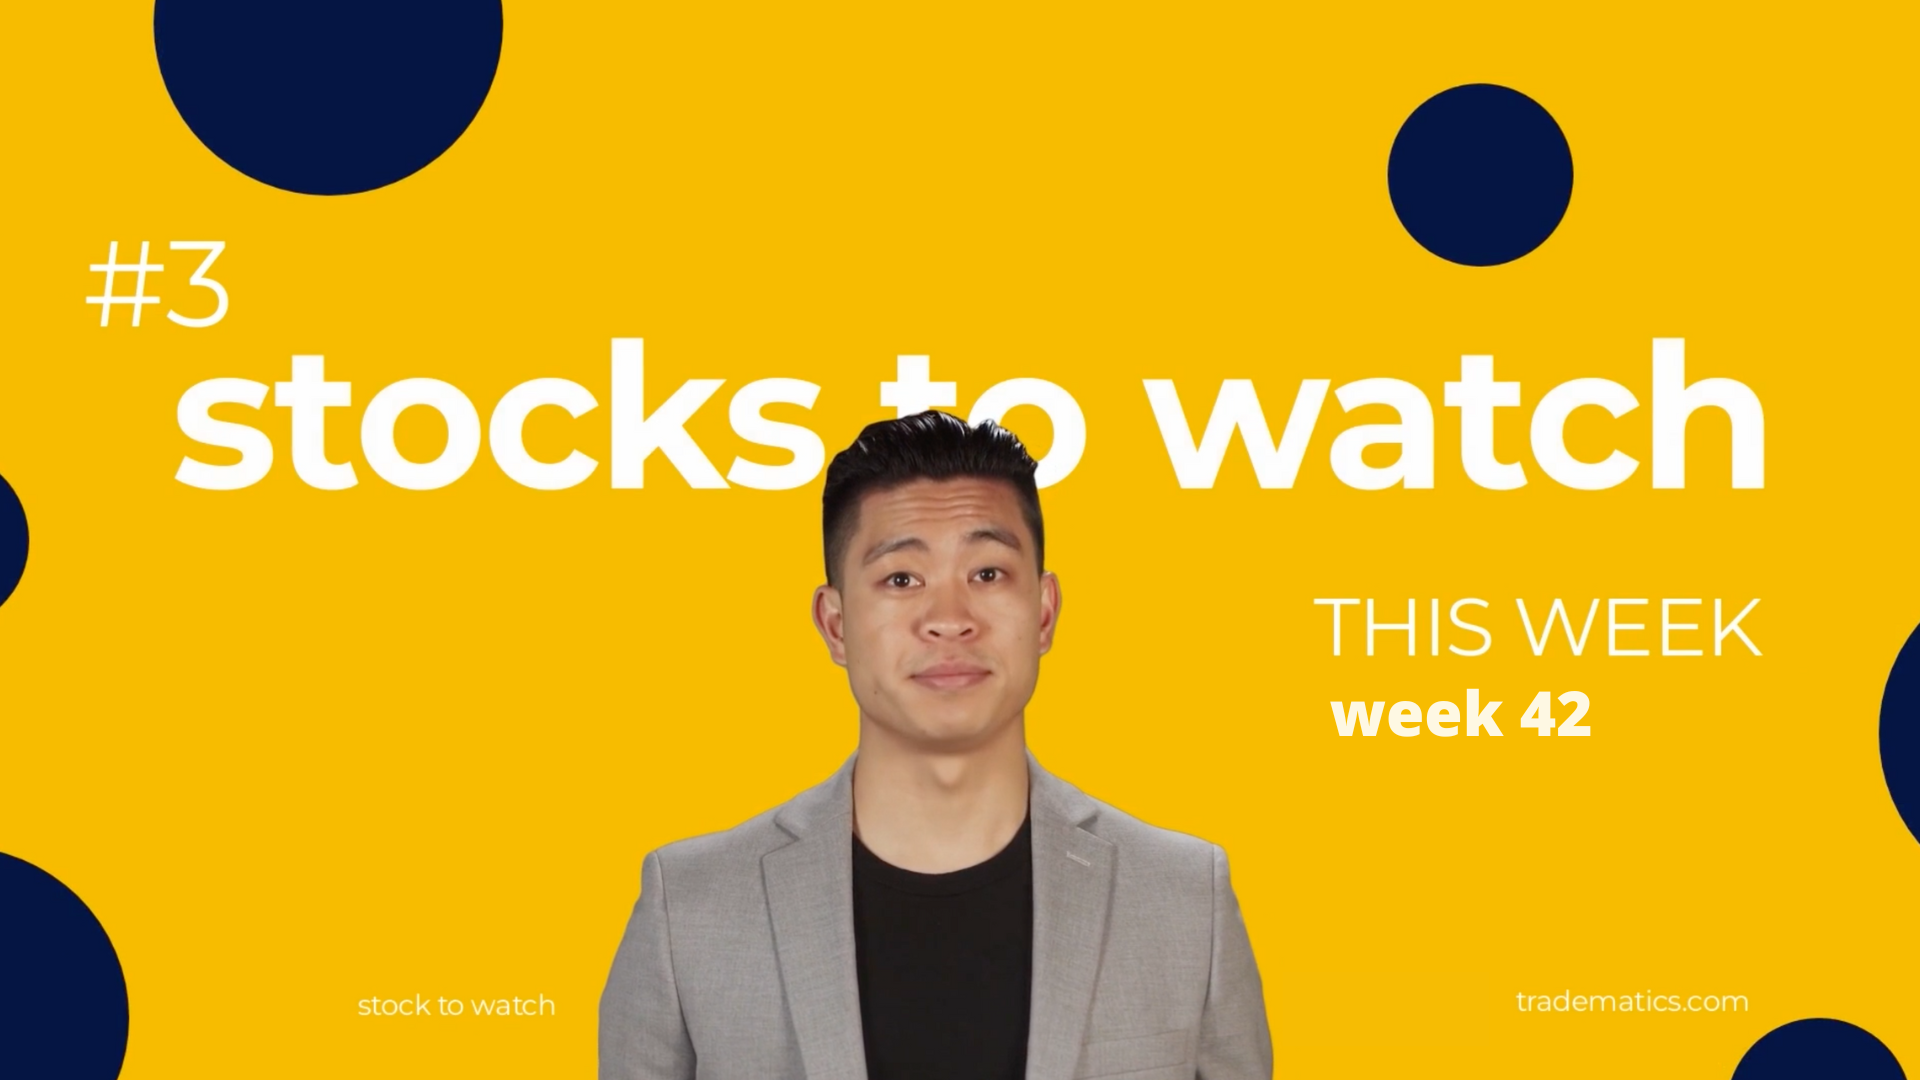 Tradematics | Stocks to Watch this week | week 42